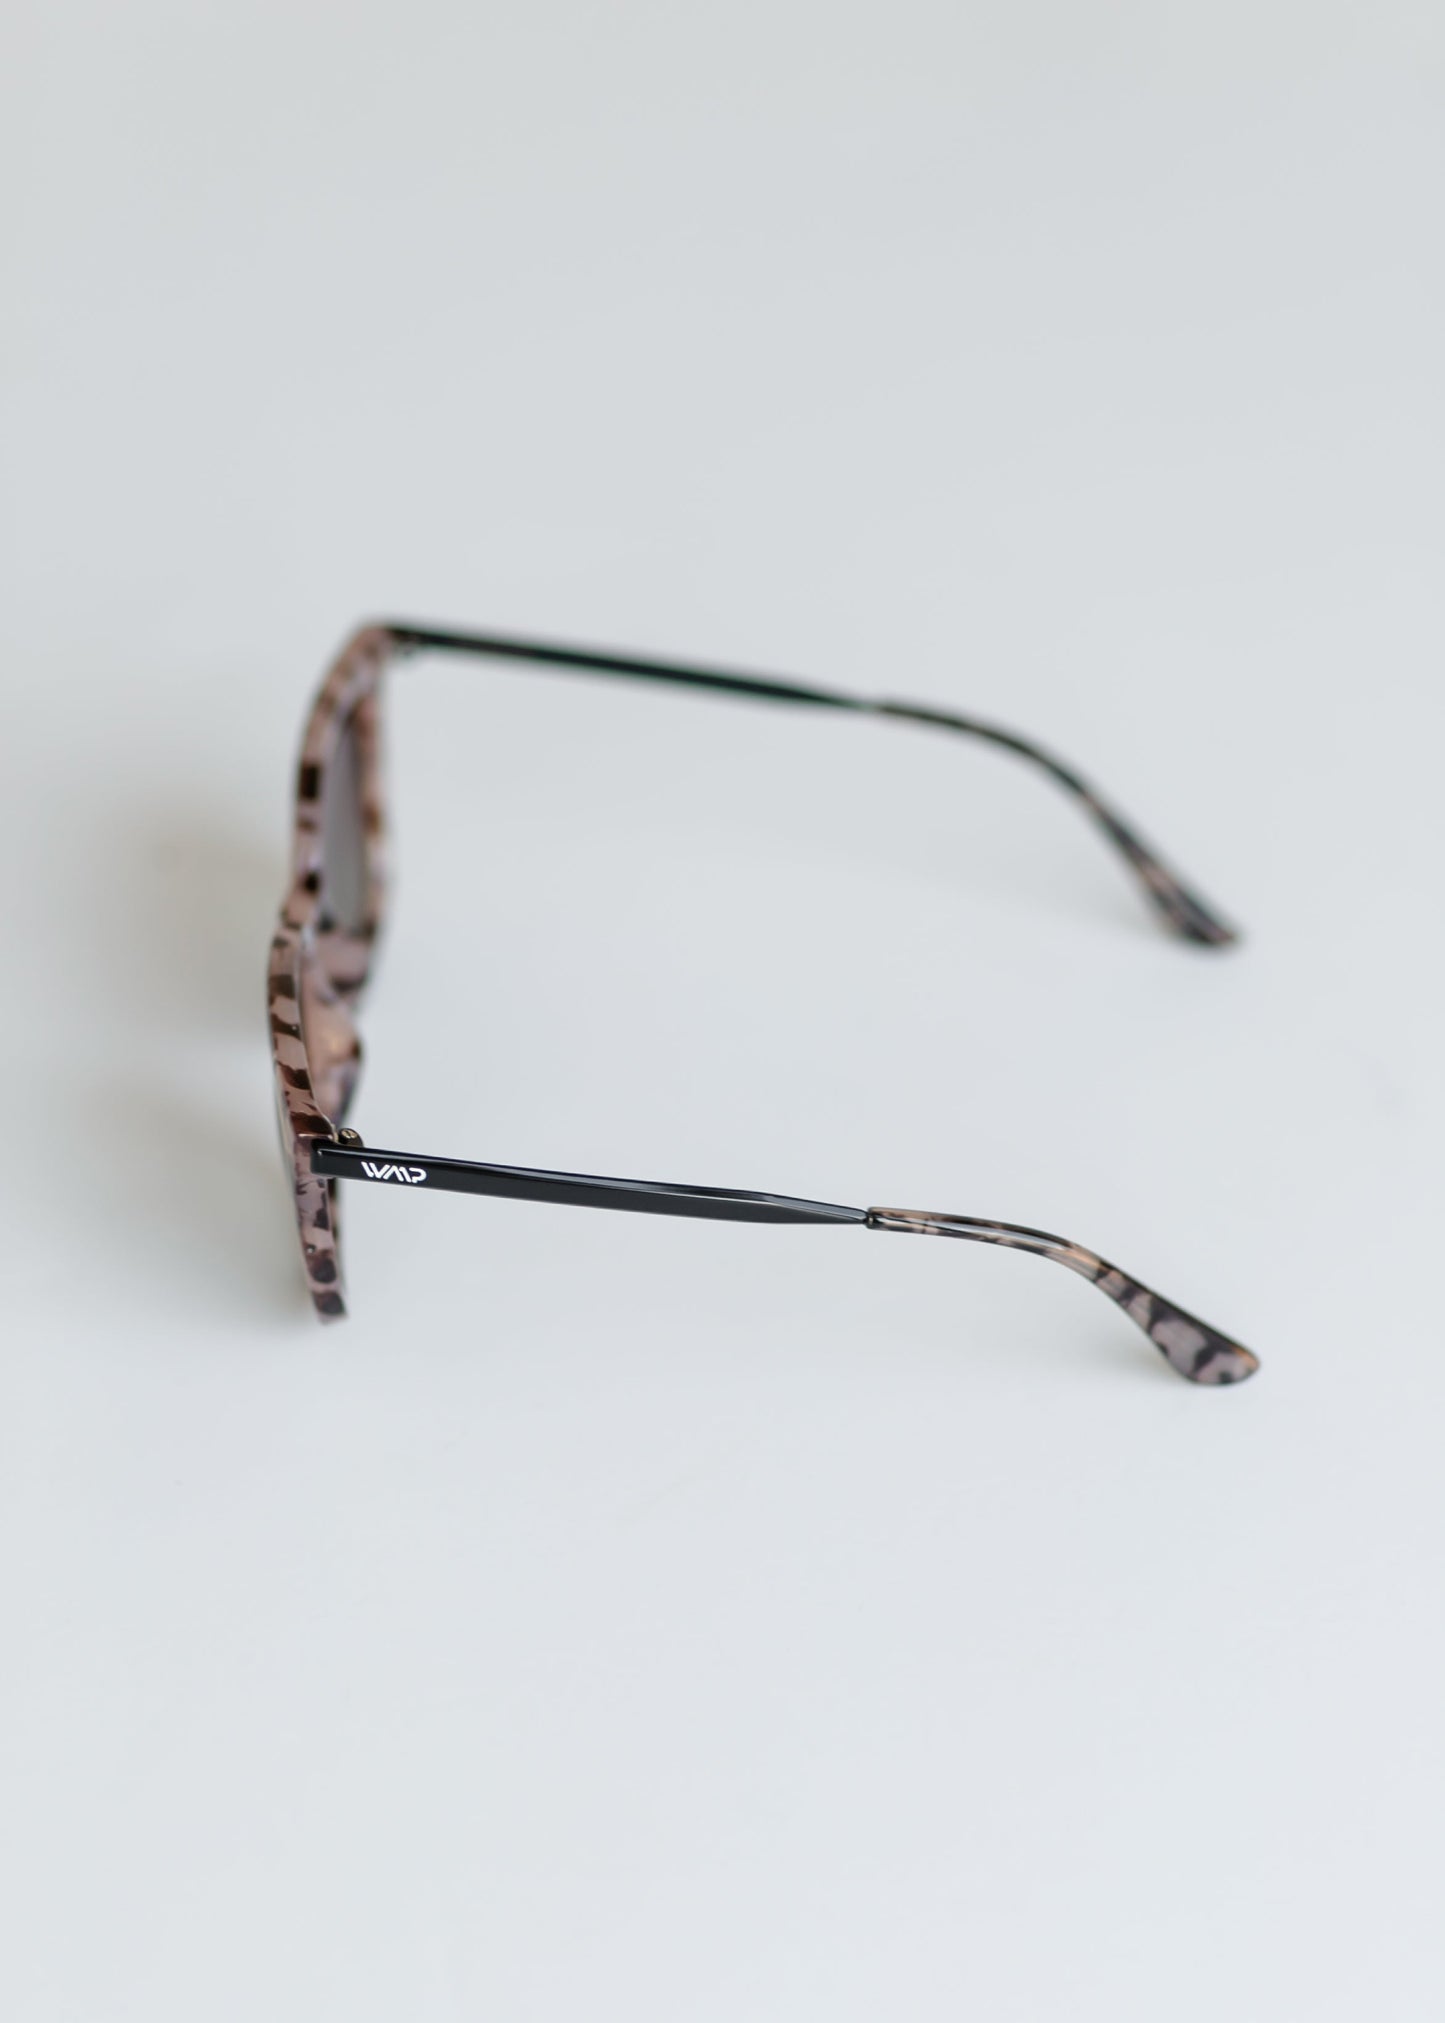 Blush Pink Tortoise Square Sunglasses Accessories